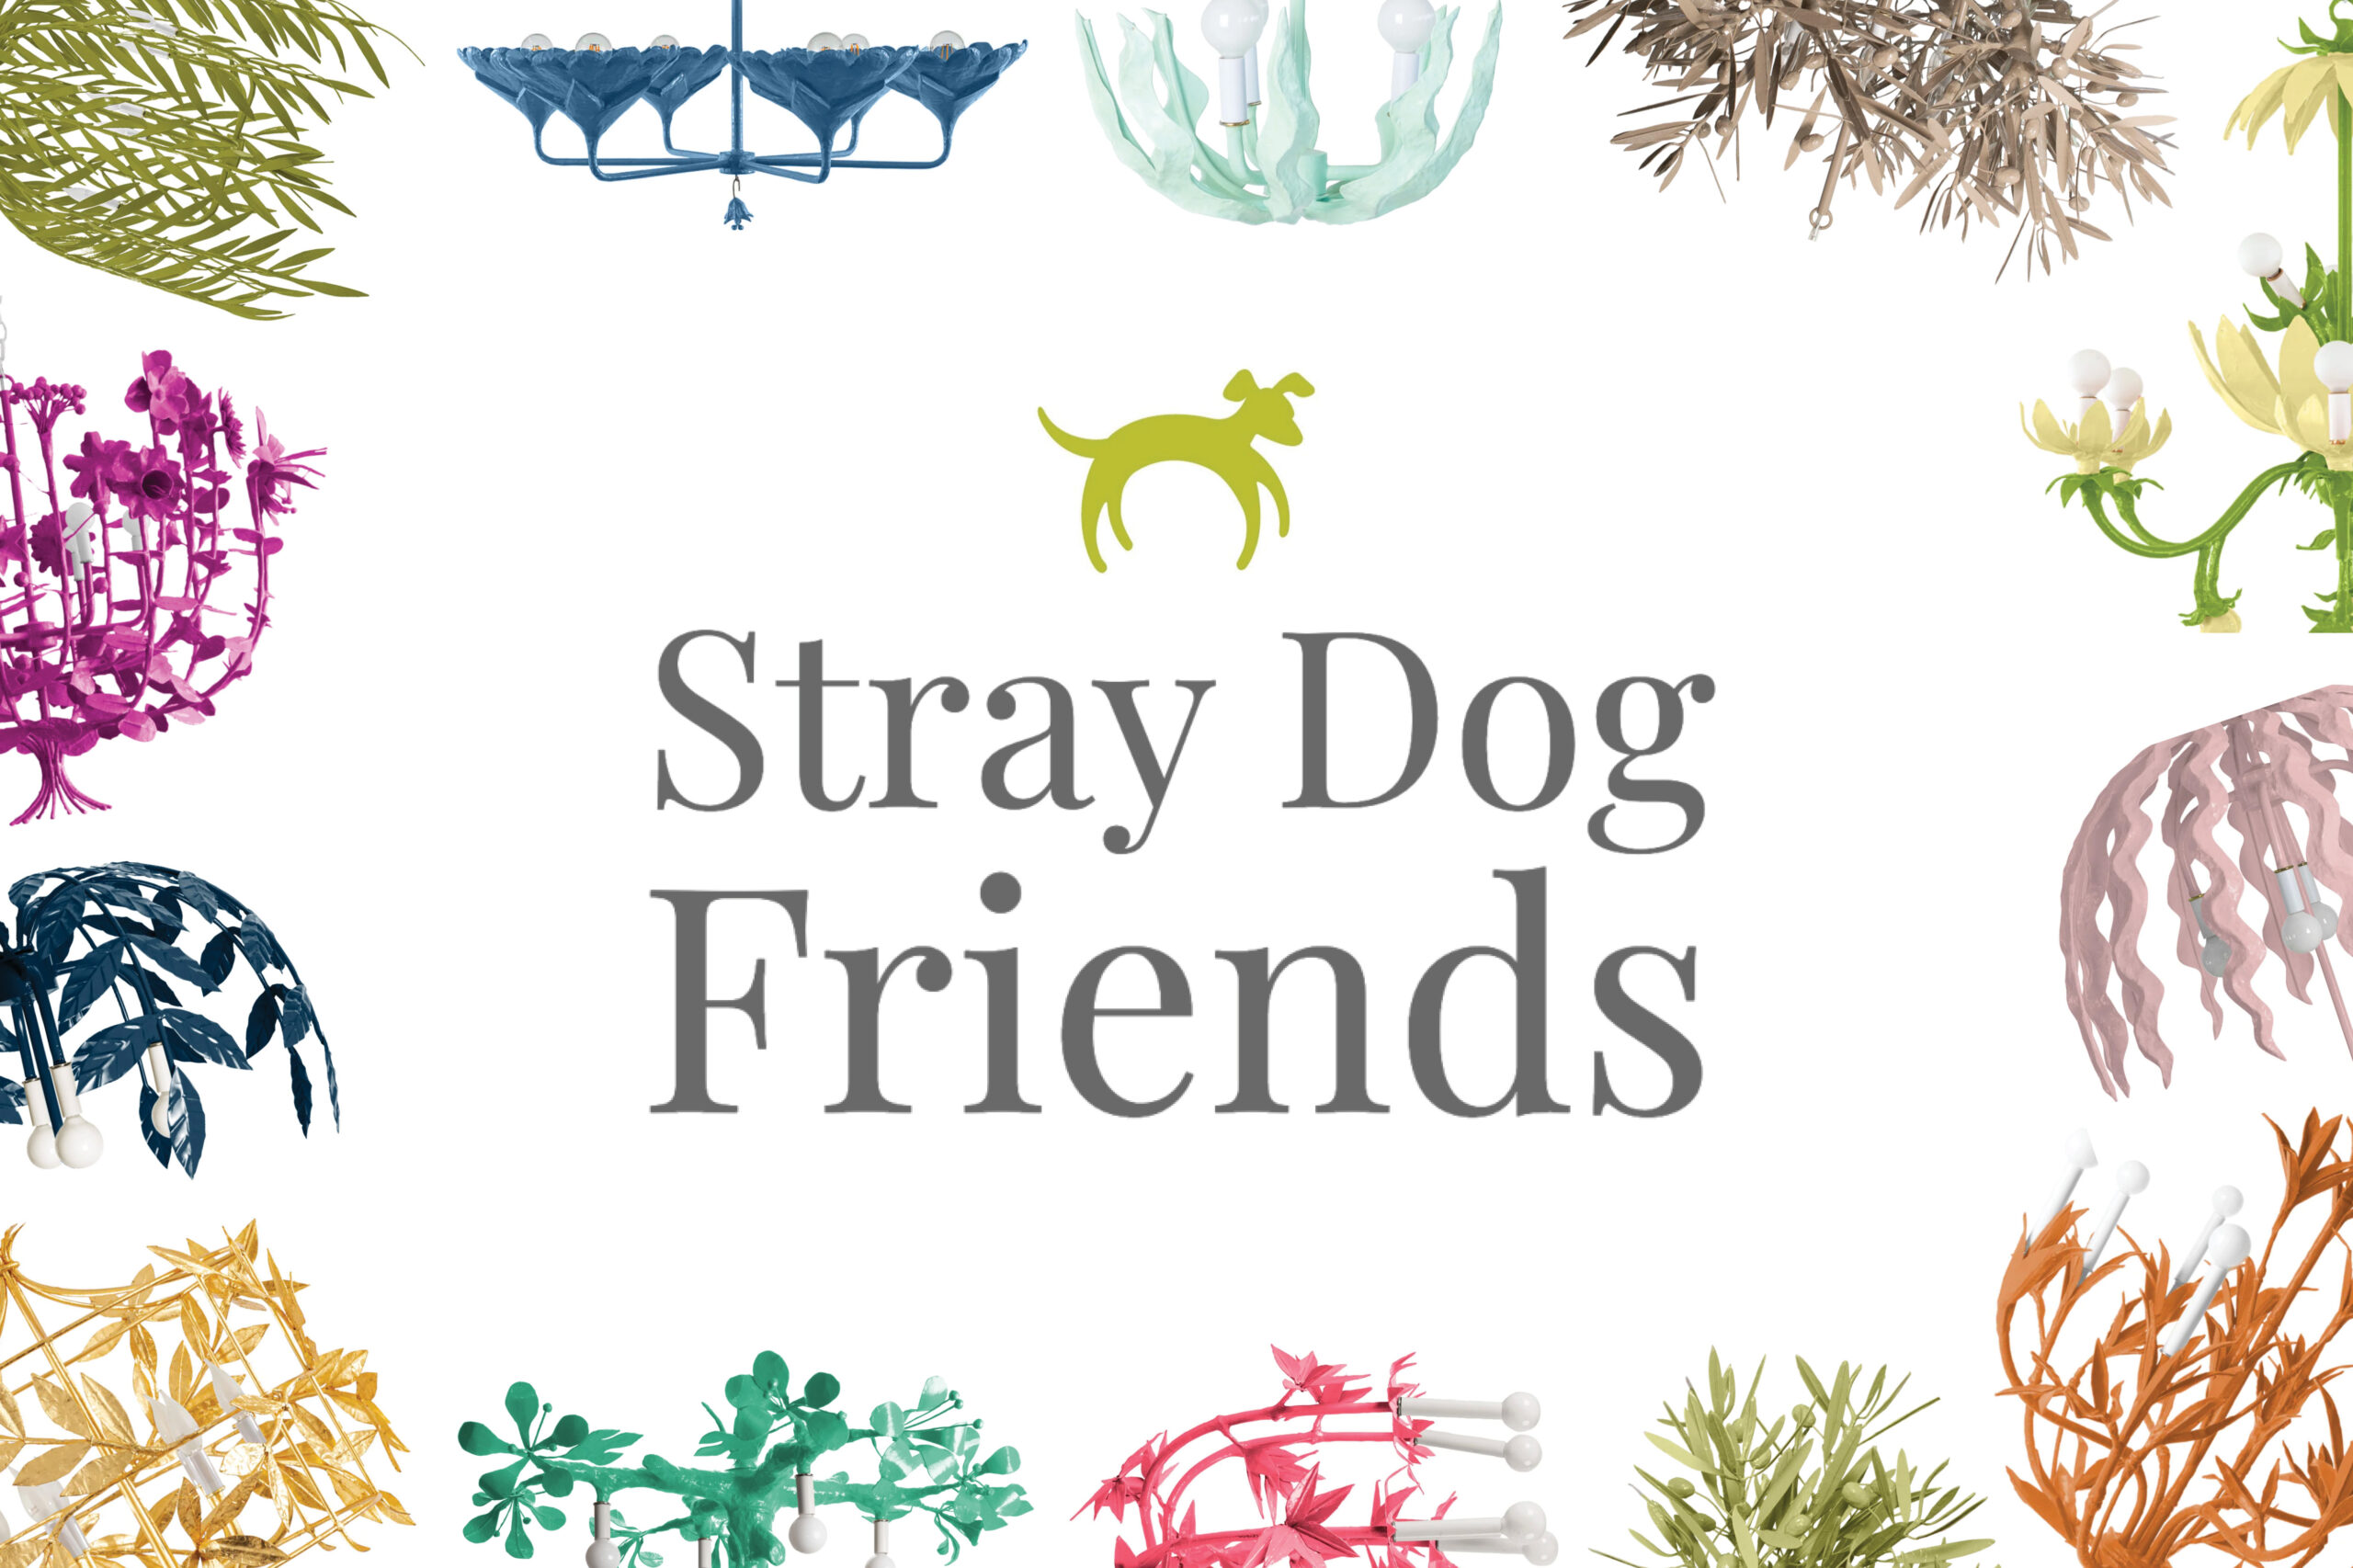 Stray Dog Friends